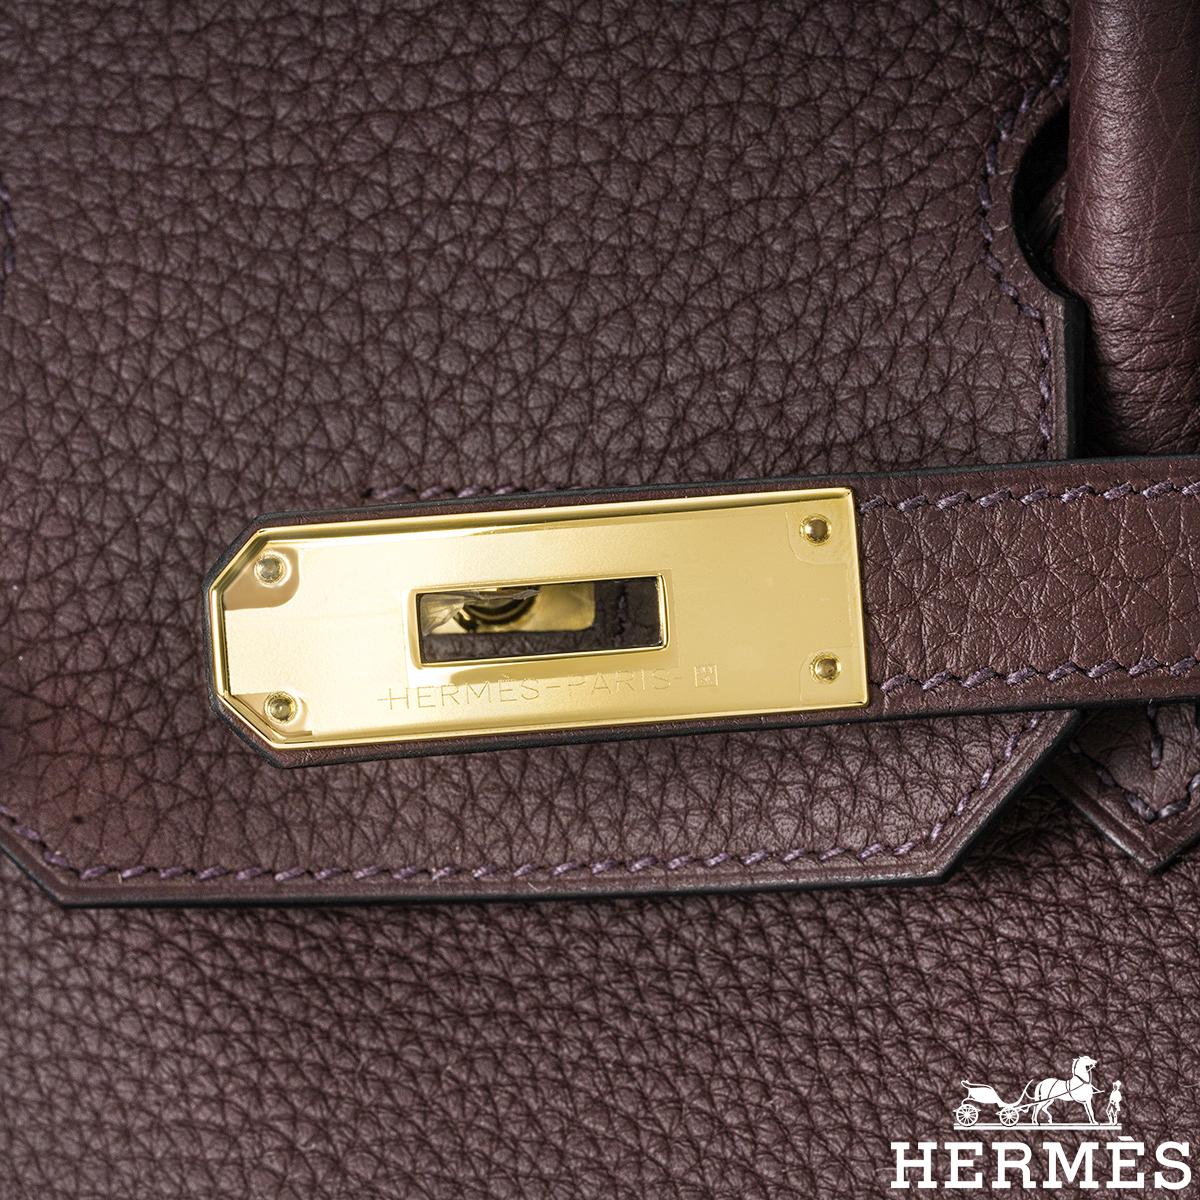 Hermès Birkin 30cm Rogue Sellier Togo GHW 2